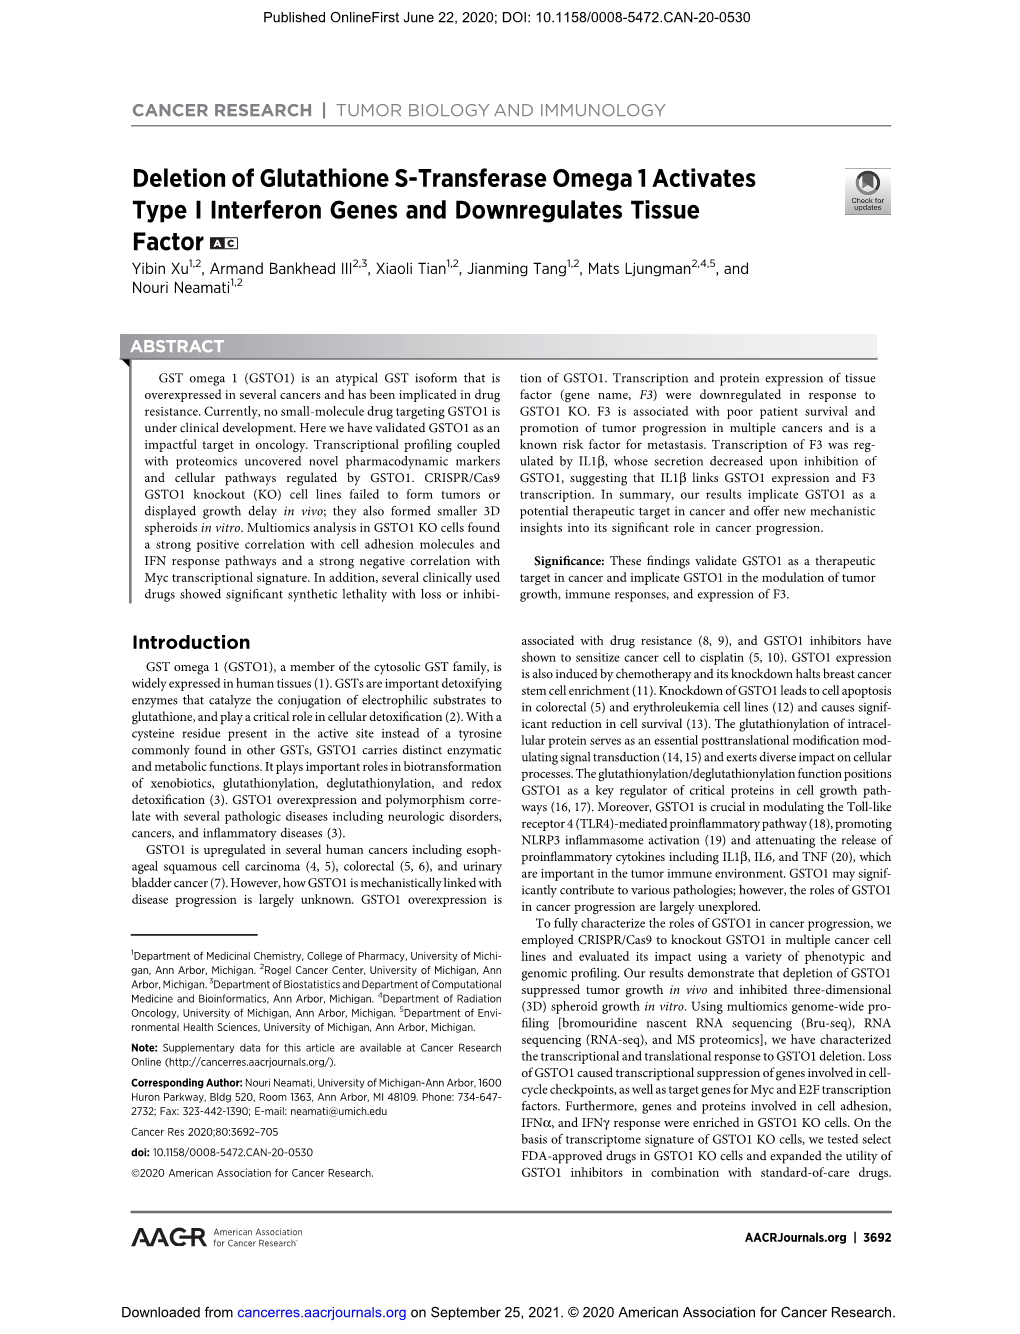 Deletion of Glutathione S-Transferase Omega 1 Activates Type I Interferon Genes and Downregulates Tissue Factor